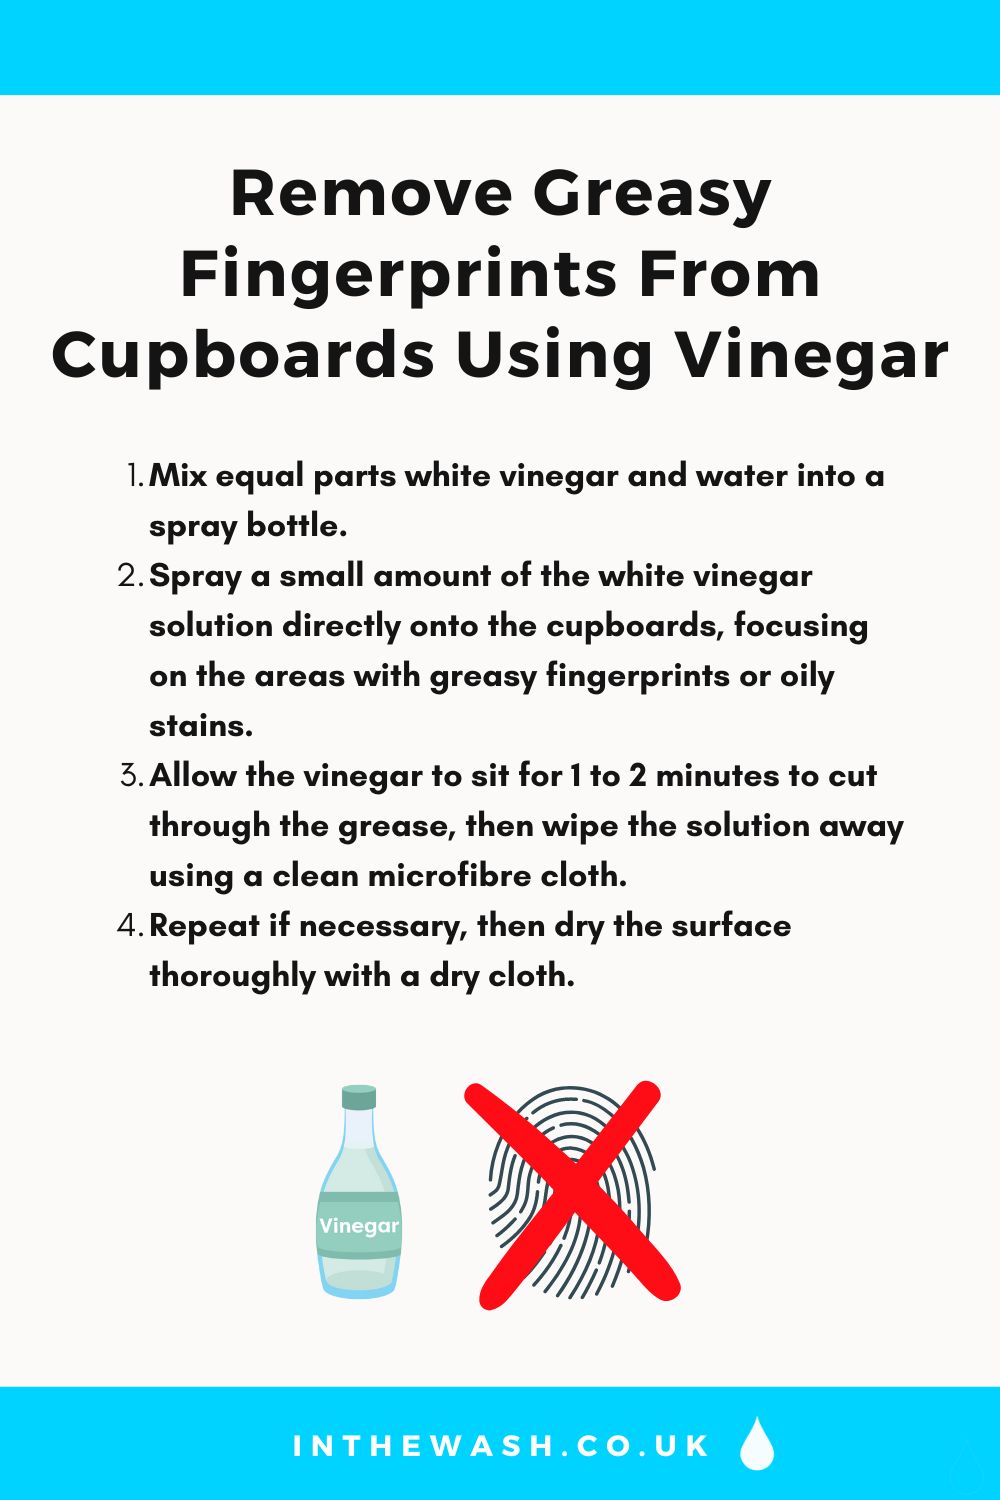 Remove greasy fingerprints from cupboards using vinegar